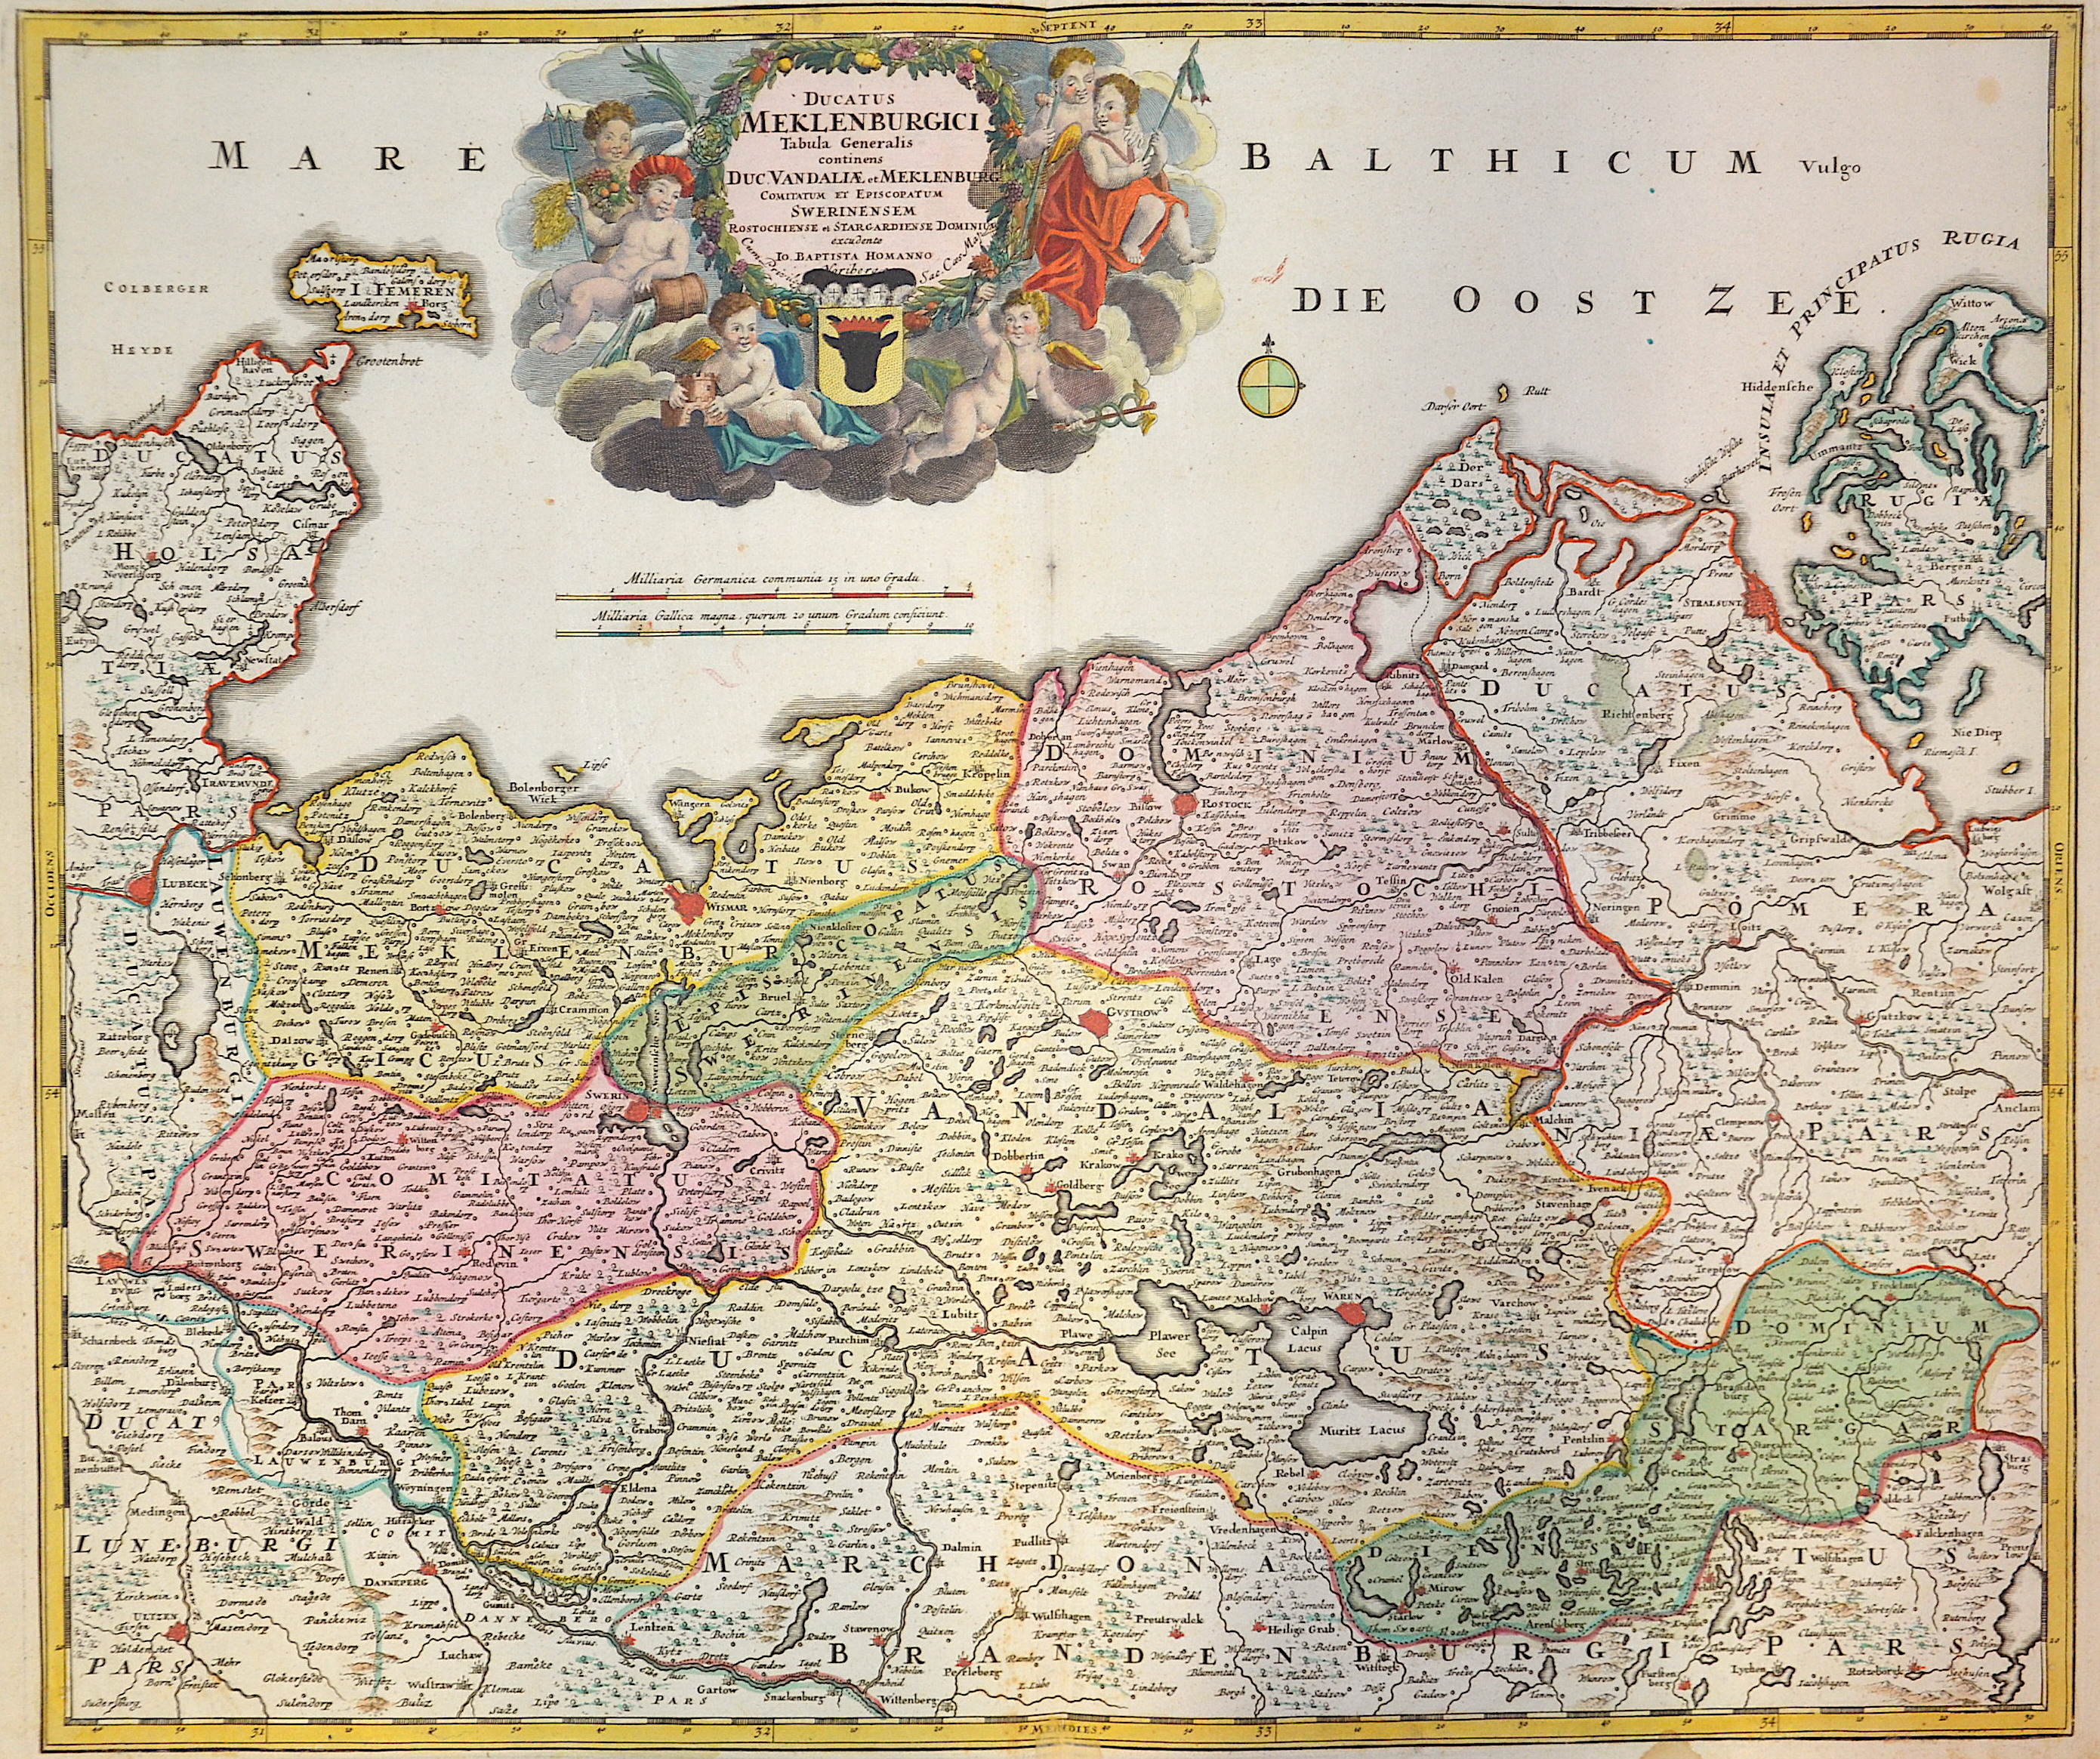 Homann Johann Babtiste Ducatus Meklenburgici tabula generalis continets duc. Vandaliae et Meklenburg….